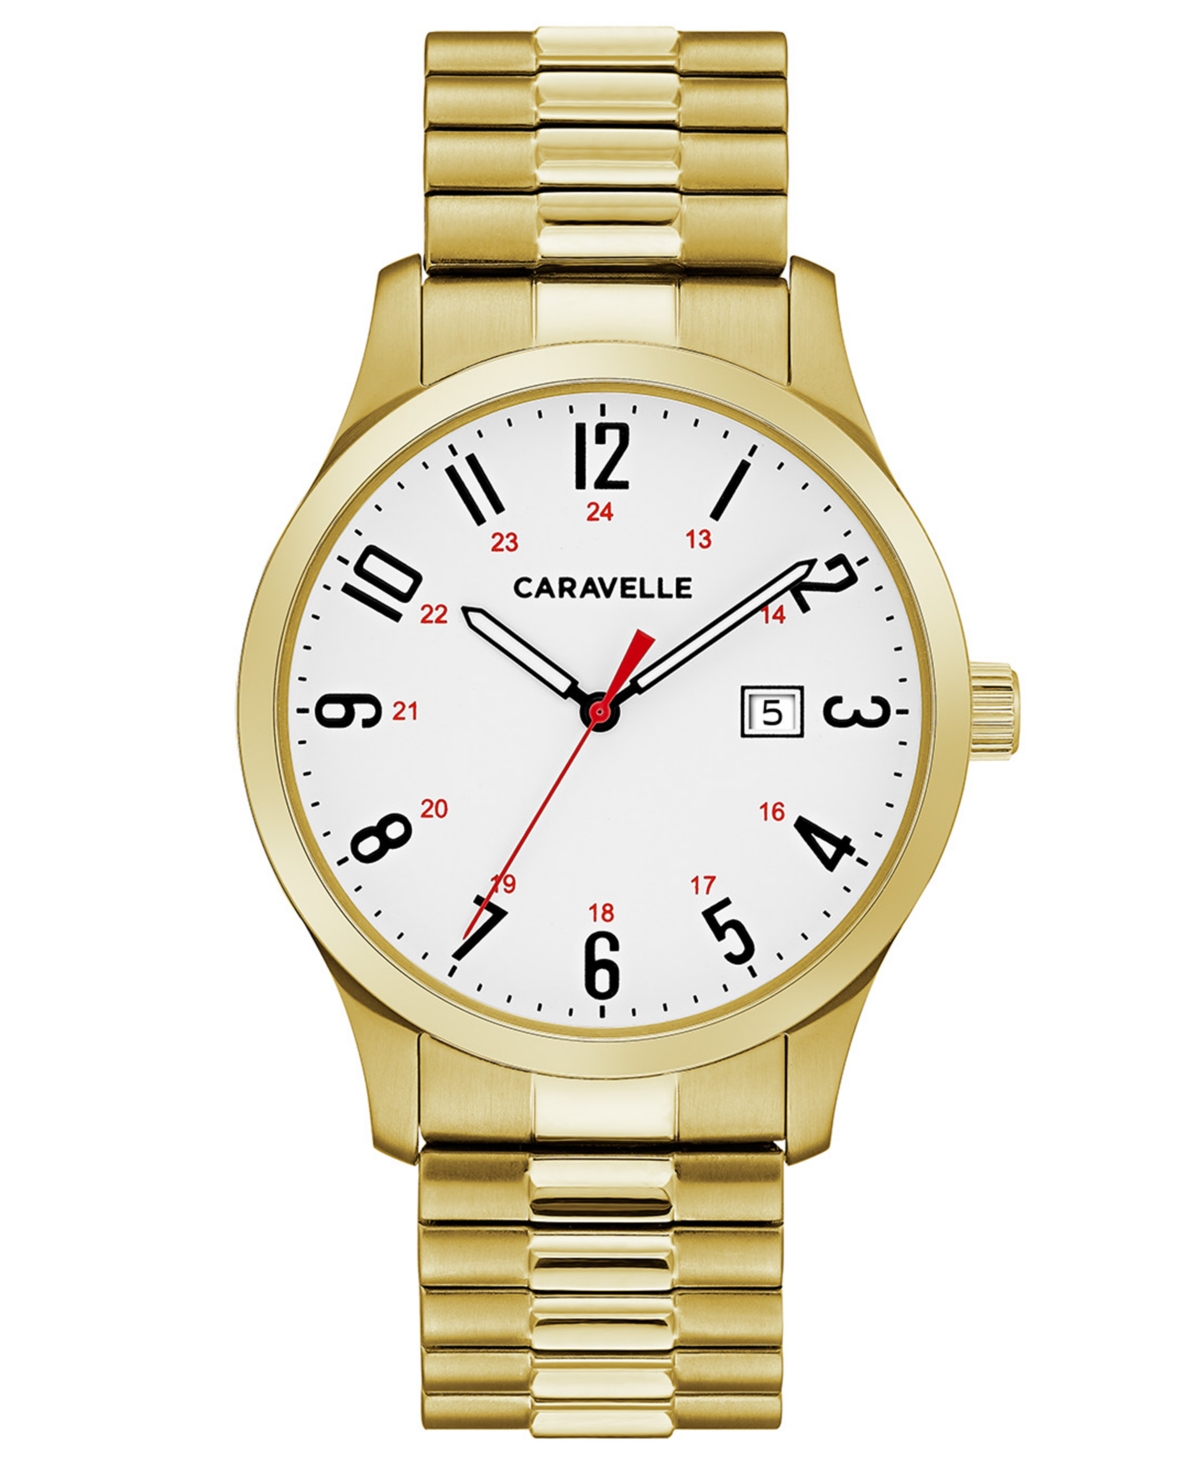 Designed by Bulova Men's Gold-Tone Stainless Steel Bracelet Watch 40mm